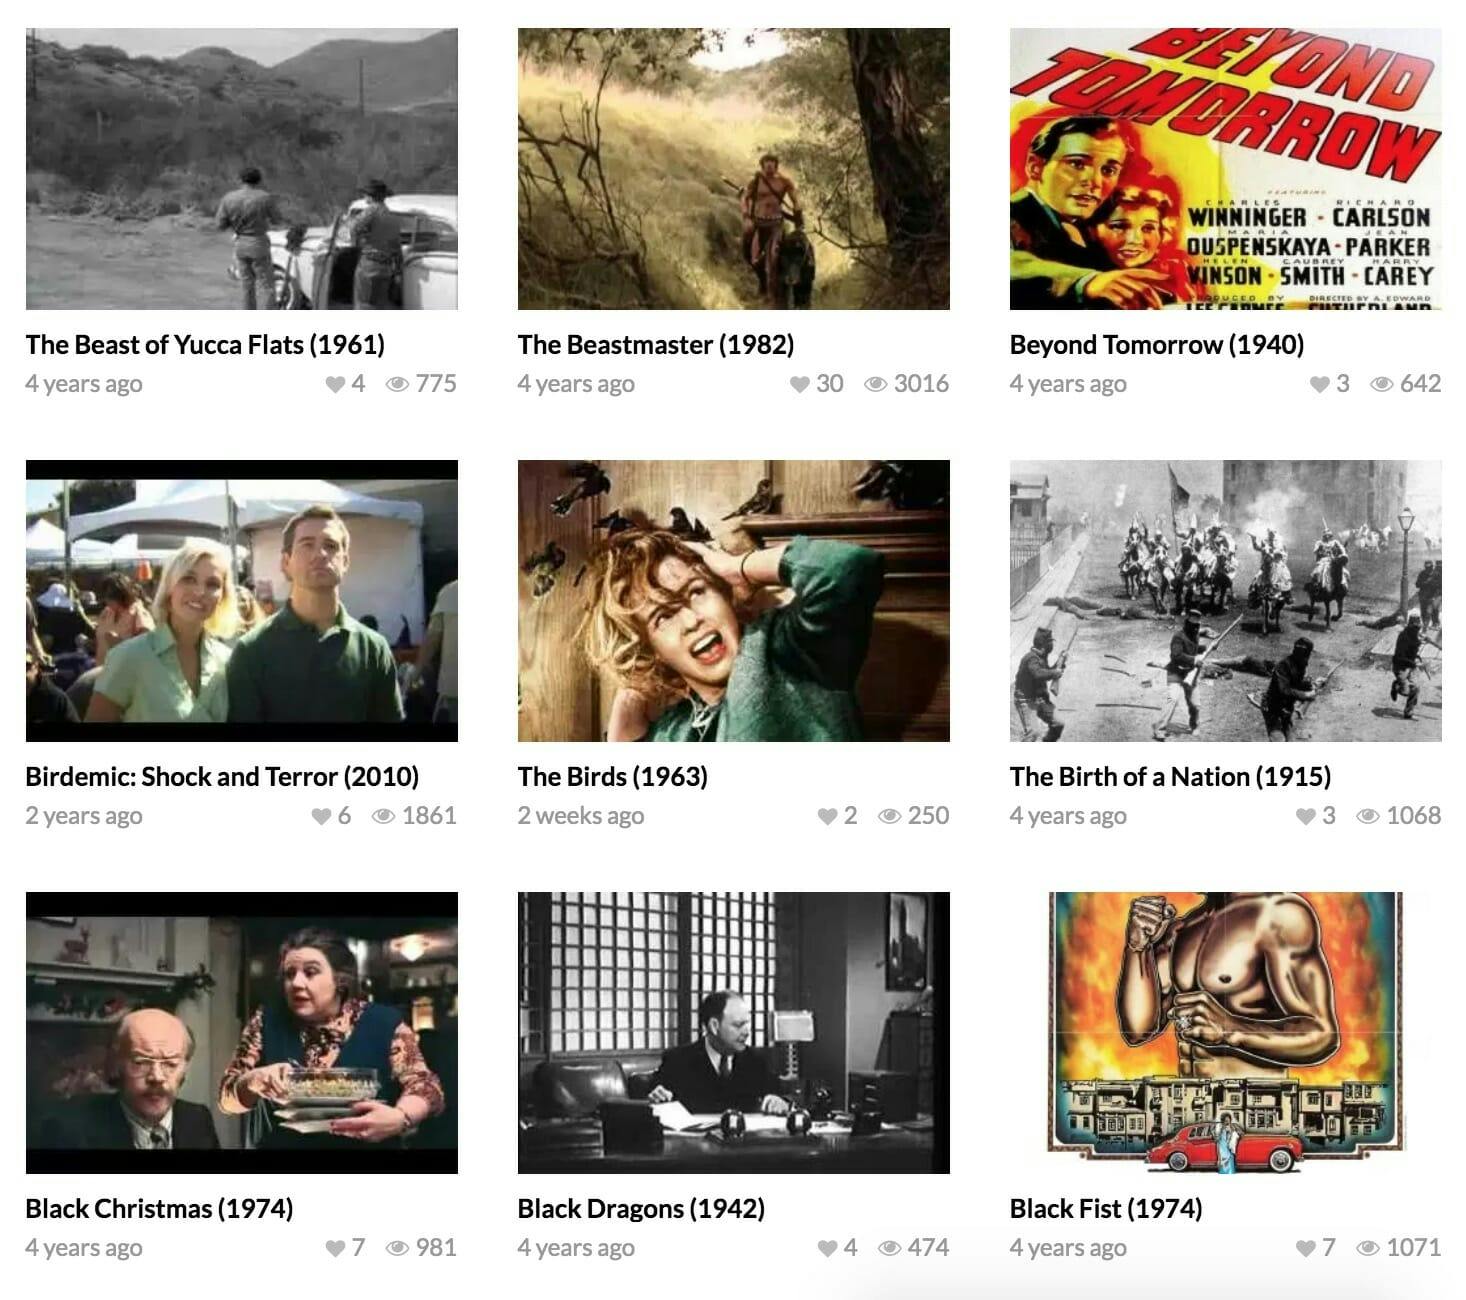 youtube free movies - foundmoviesonline